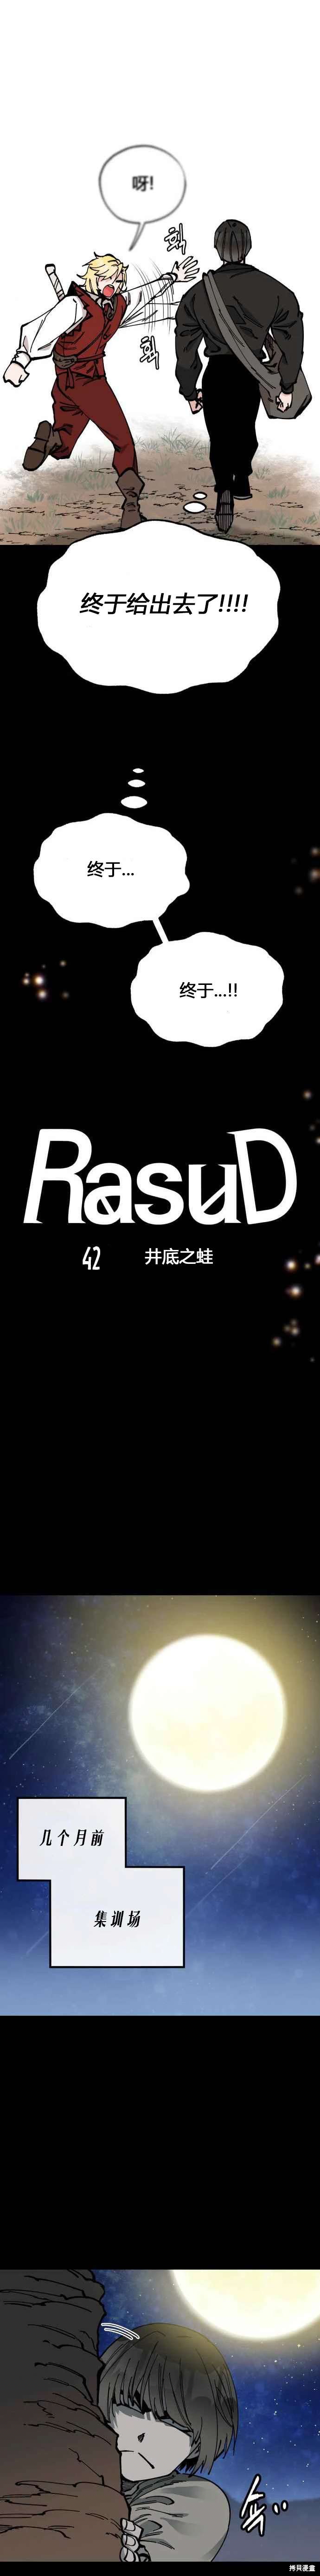 RASUD - 第42話 - 3